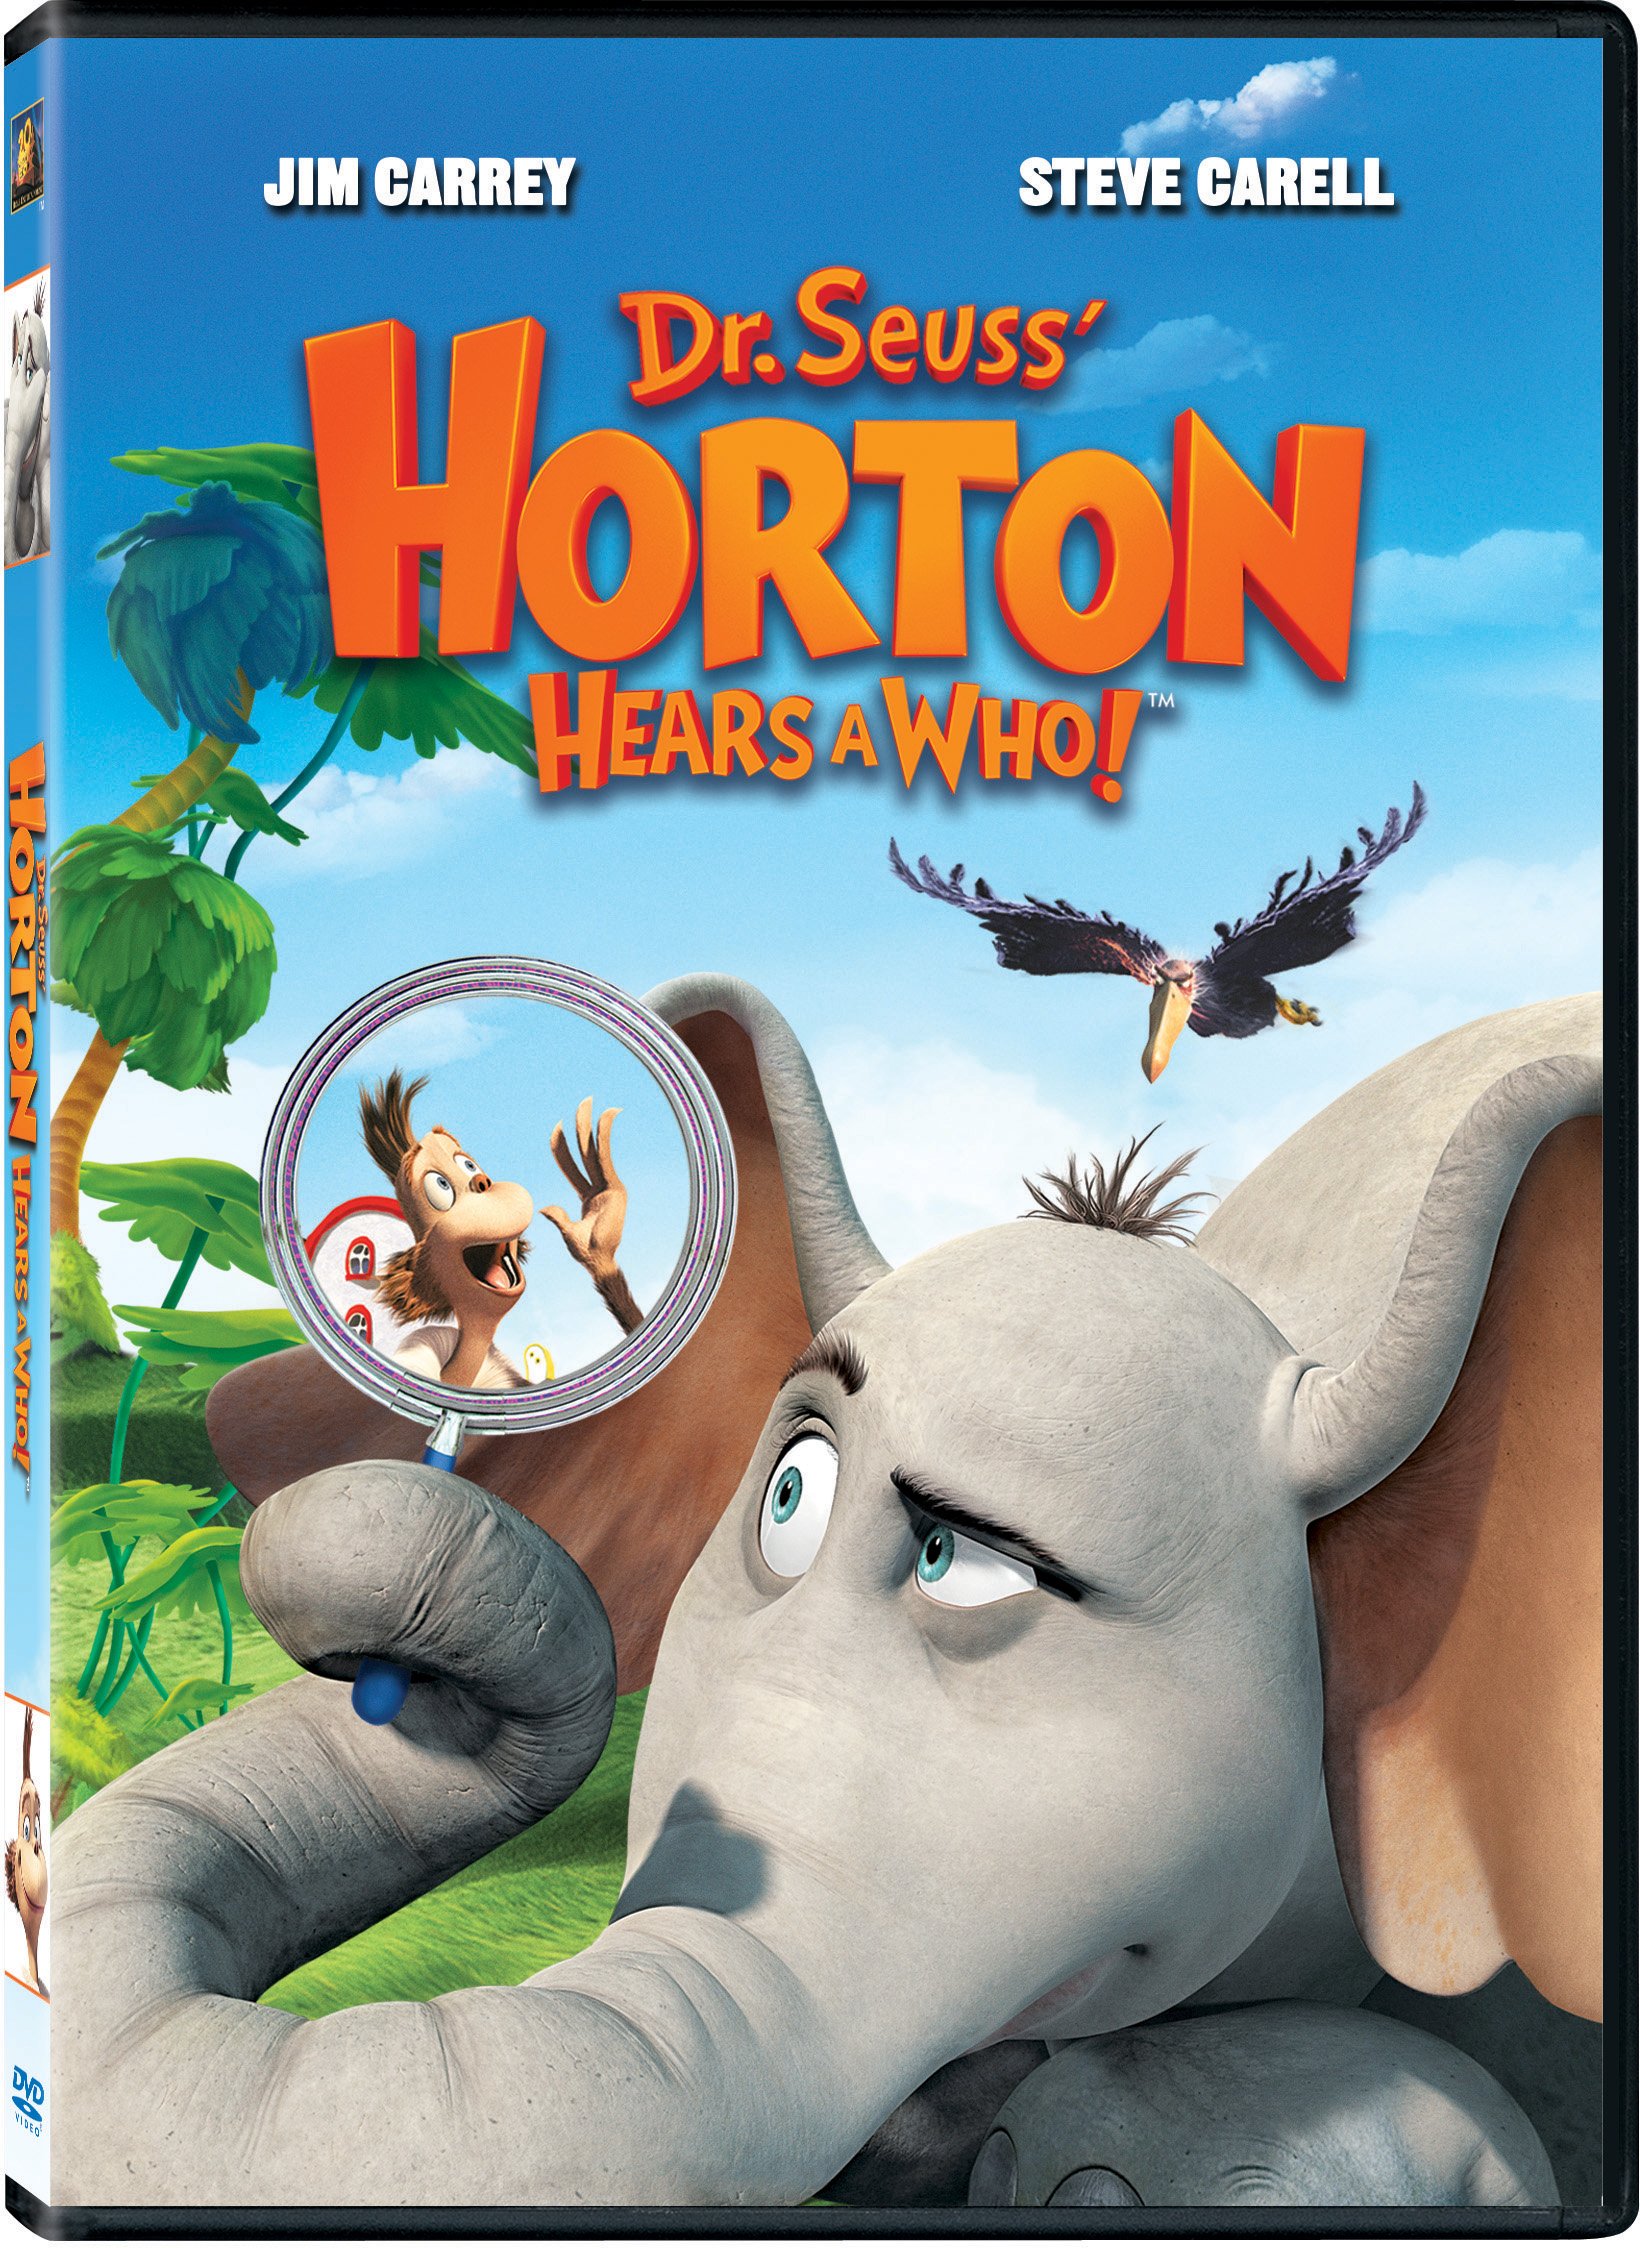 Horton Hears a Who! DVD Release Date December 9, 2008